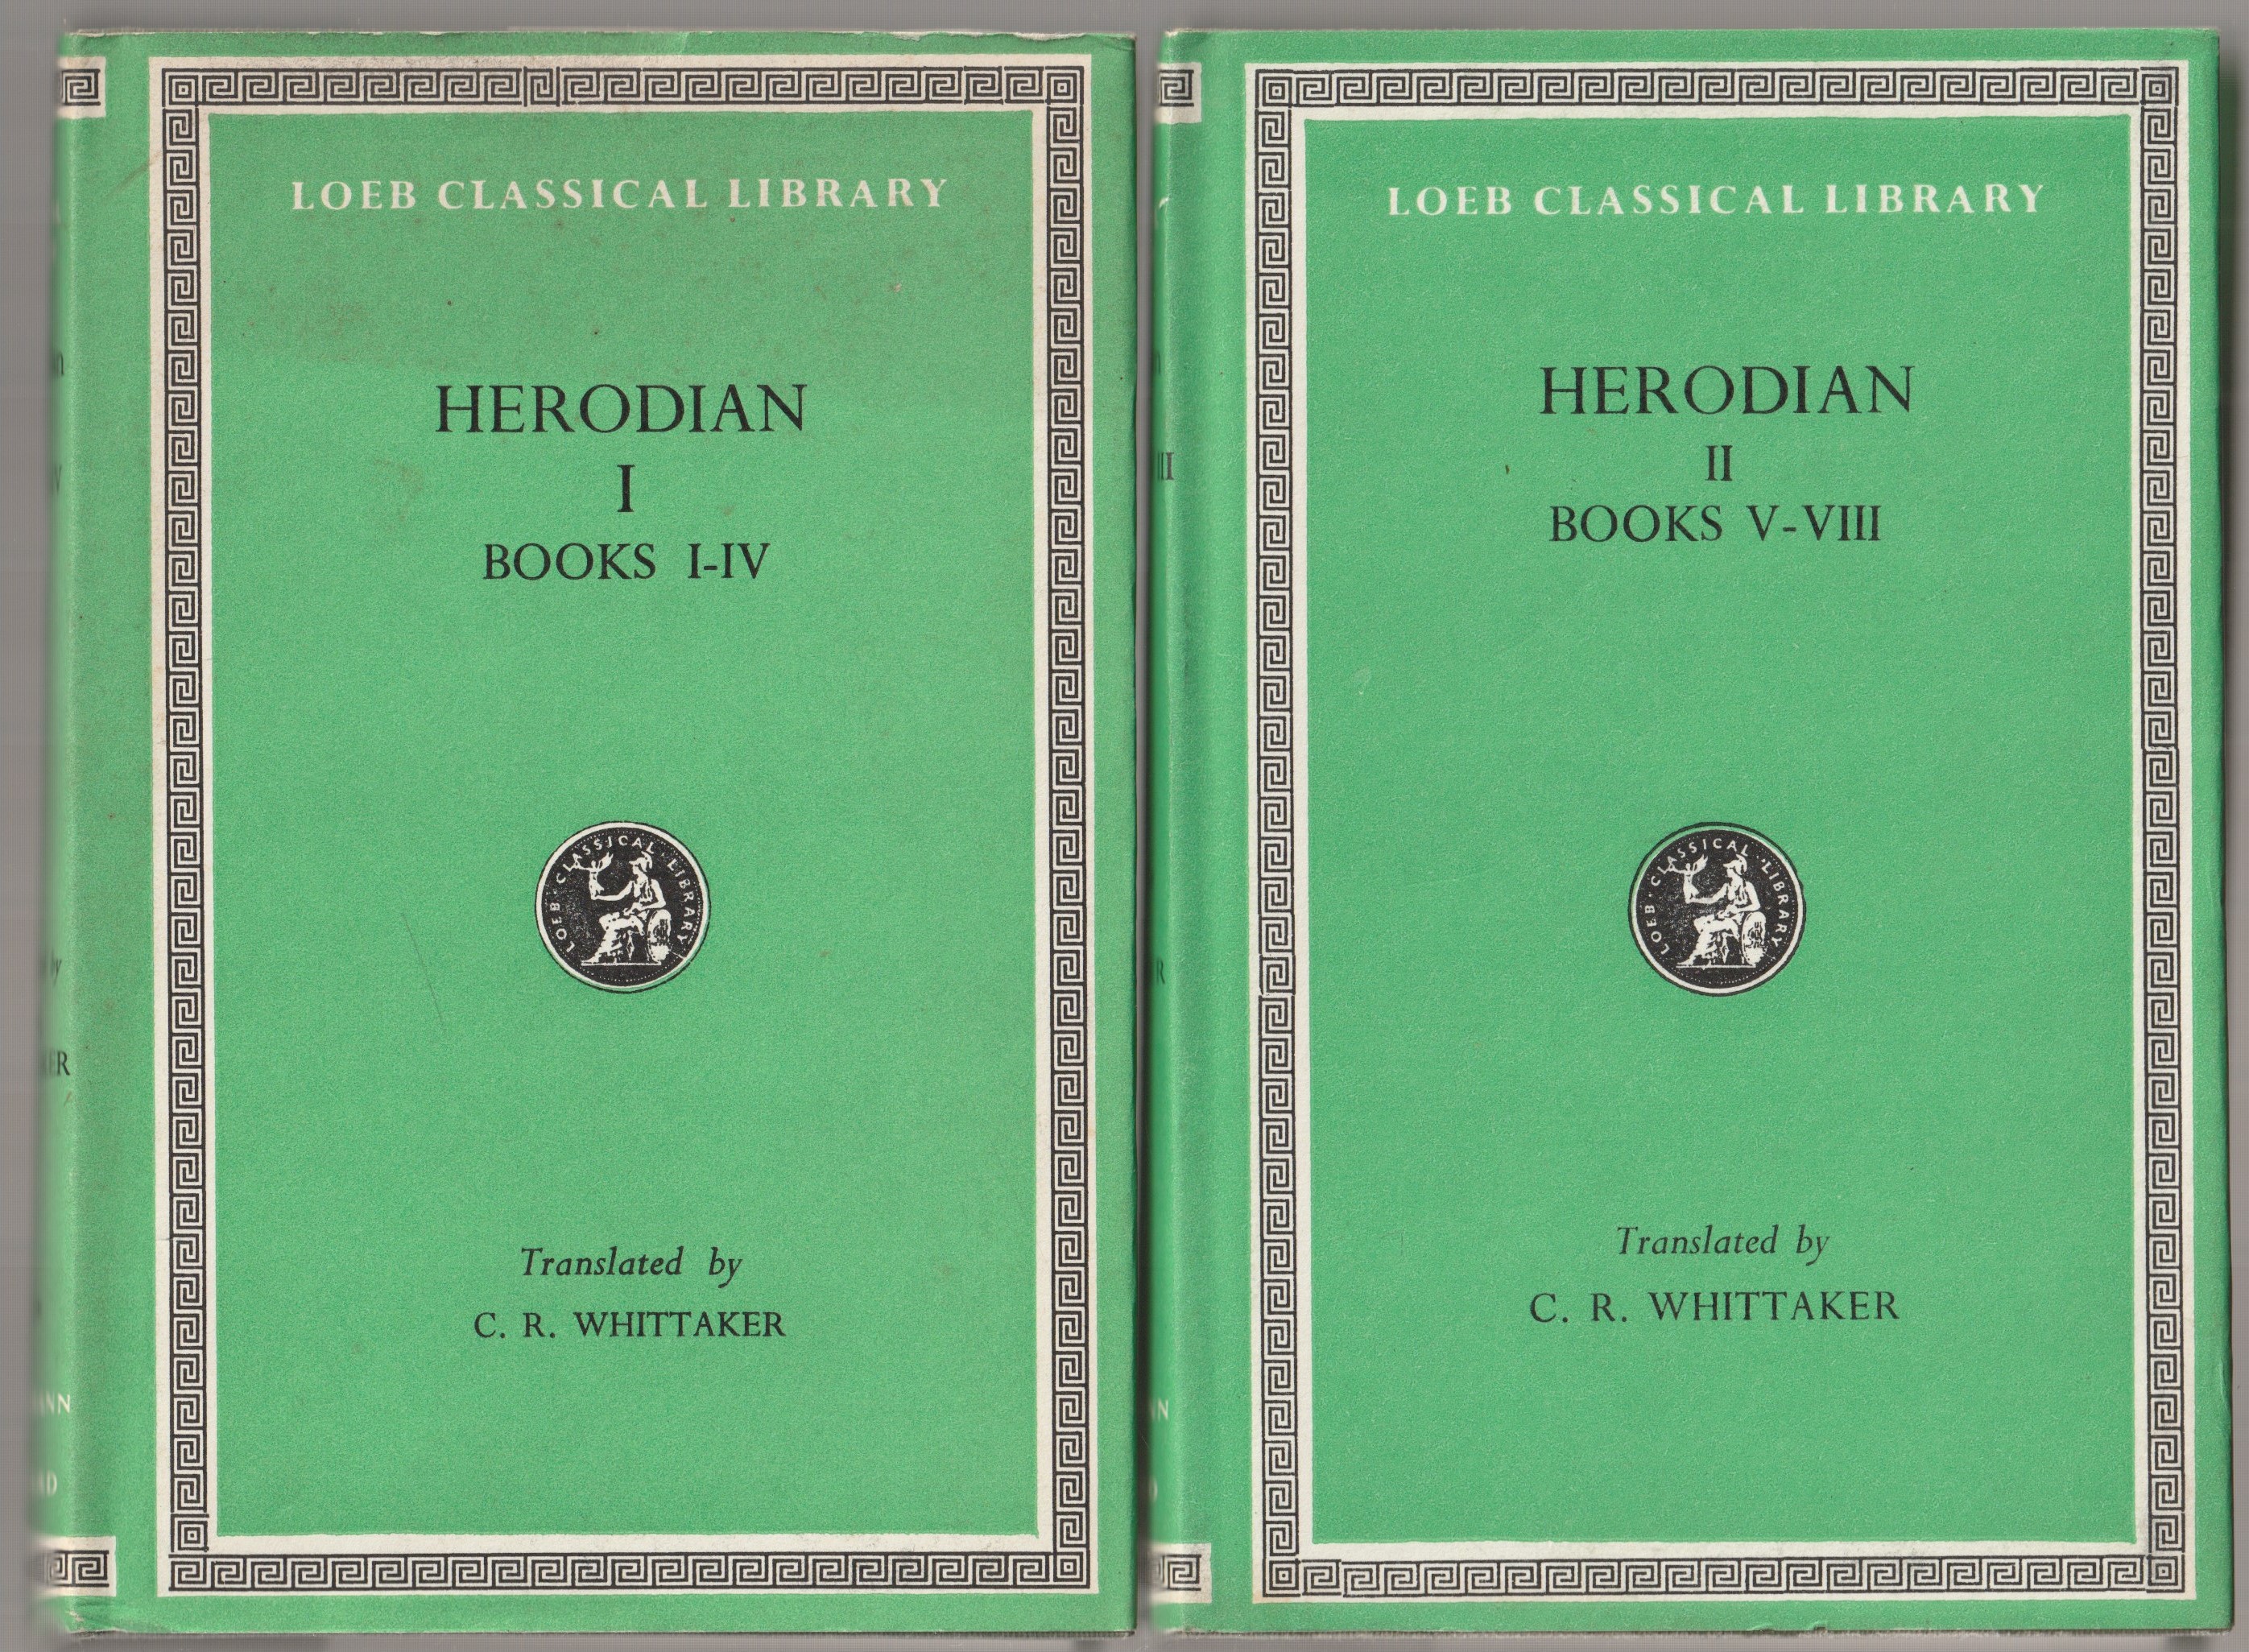 Herodian in two volumes, 1-2